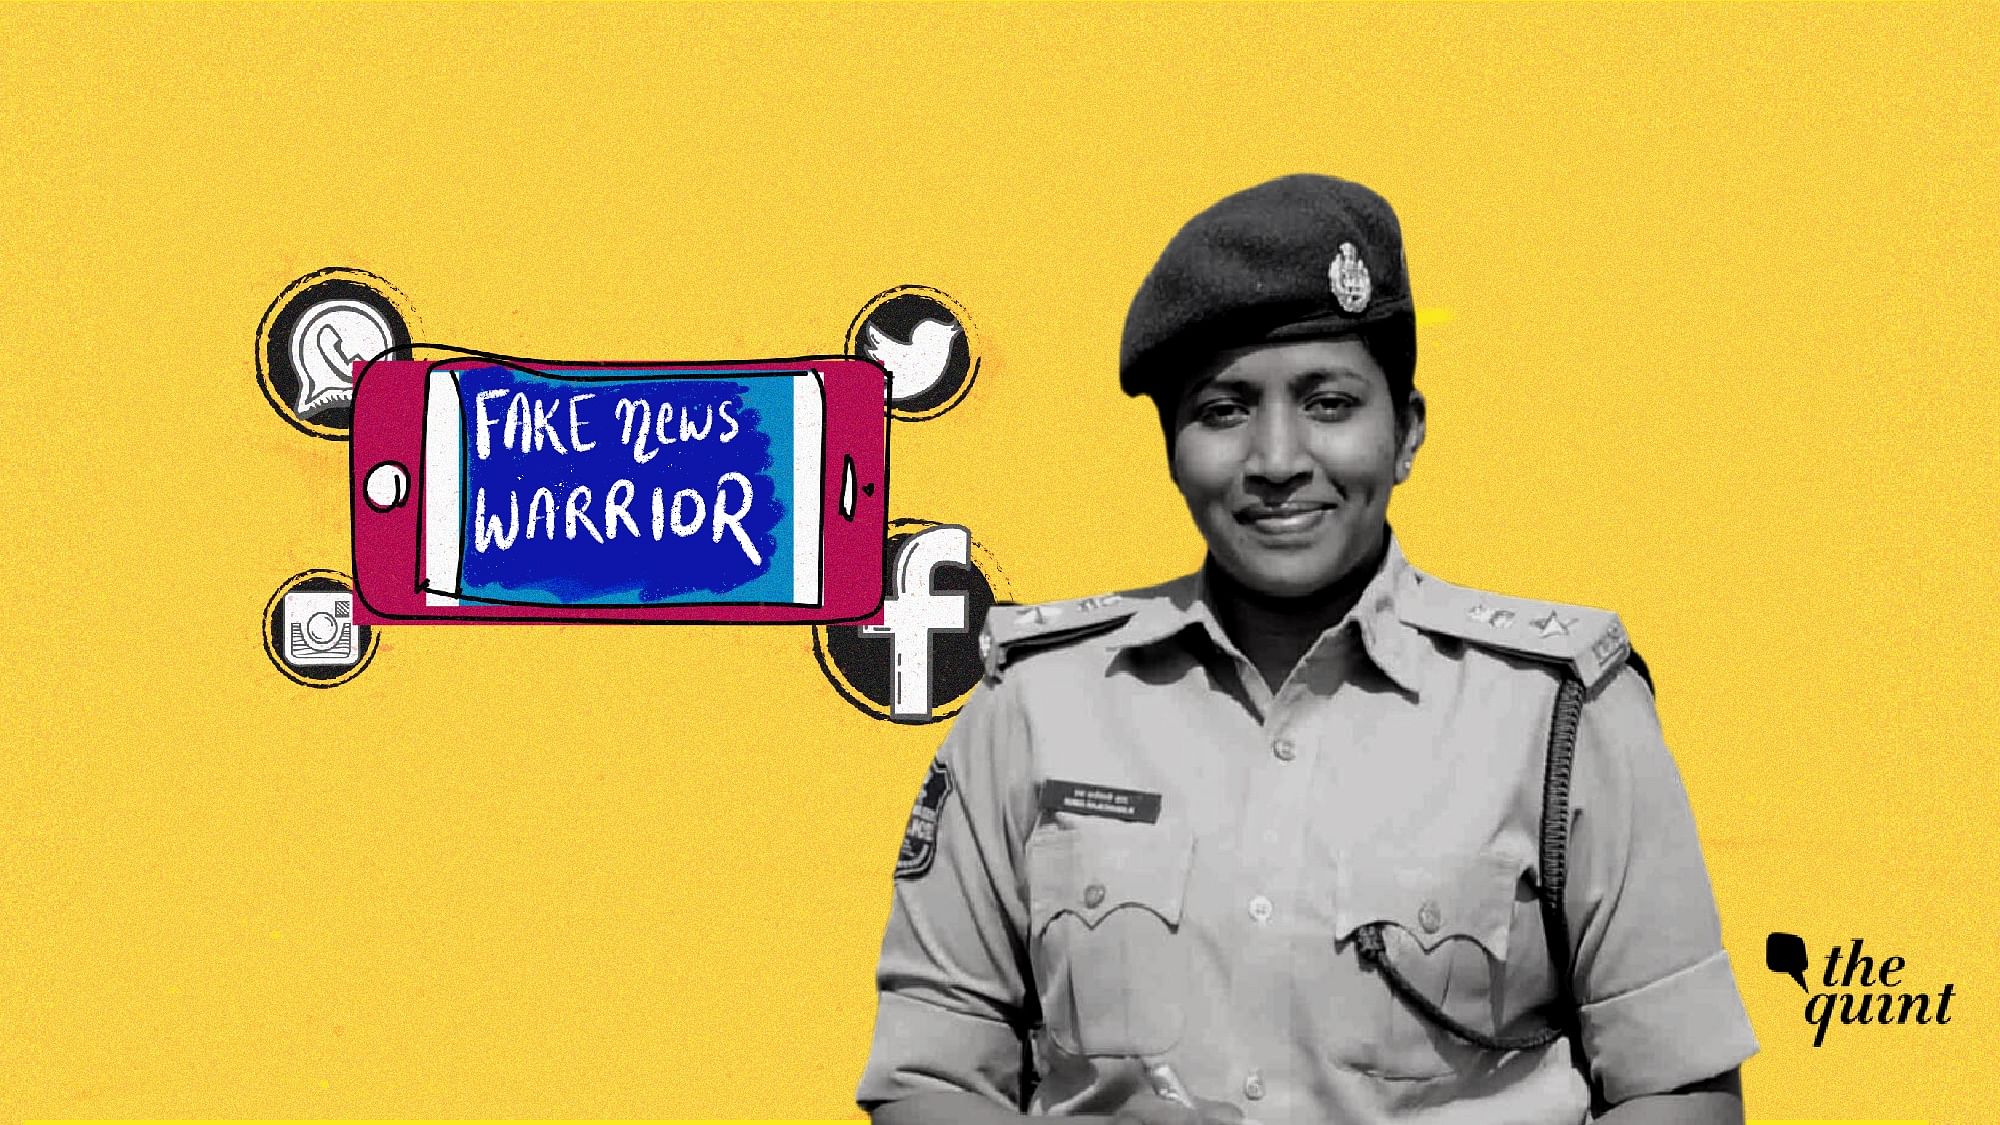 Meet Superintendent of Police Rema Rajeshwari, took it upon herself to fight fake misinformation.